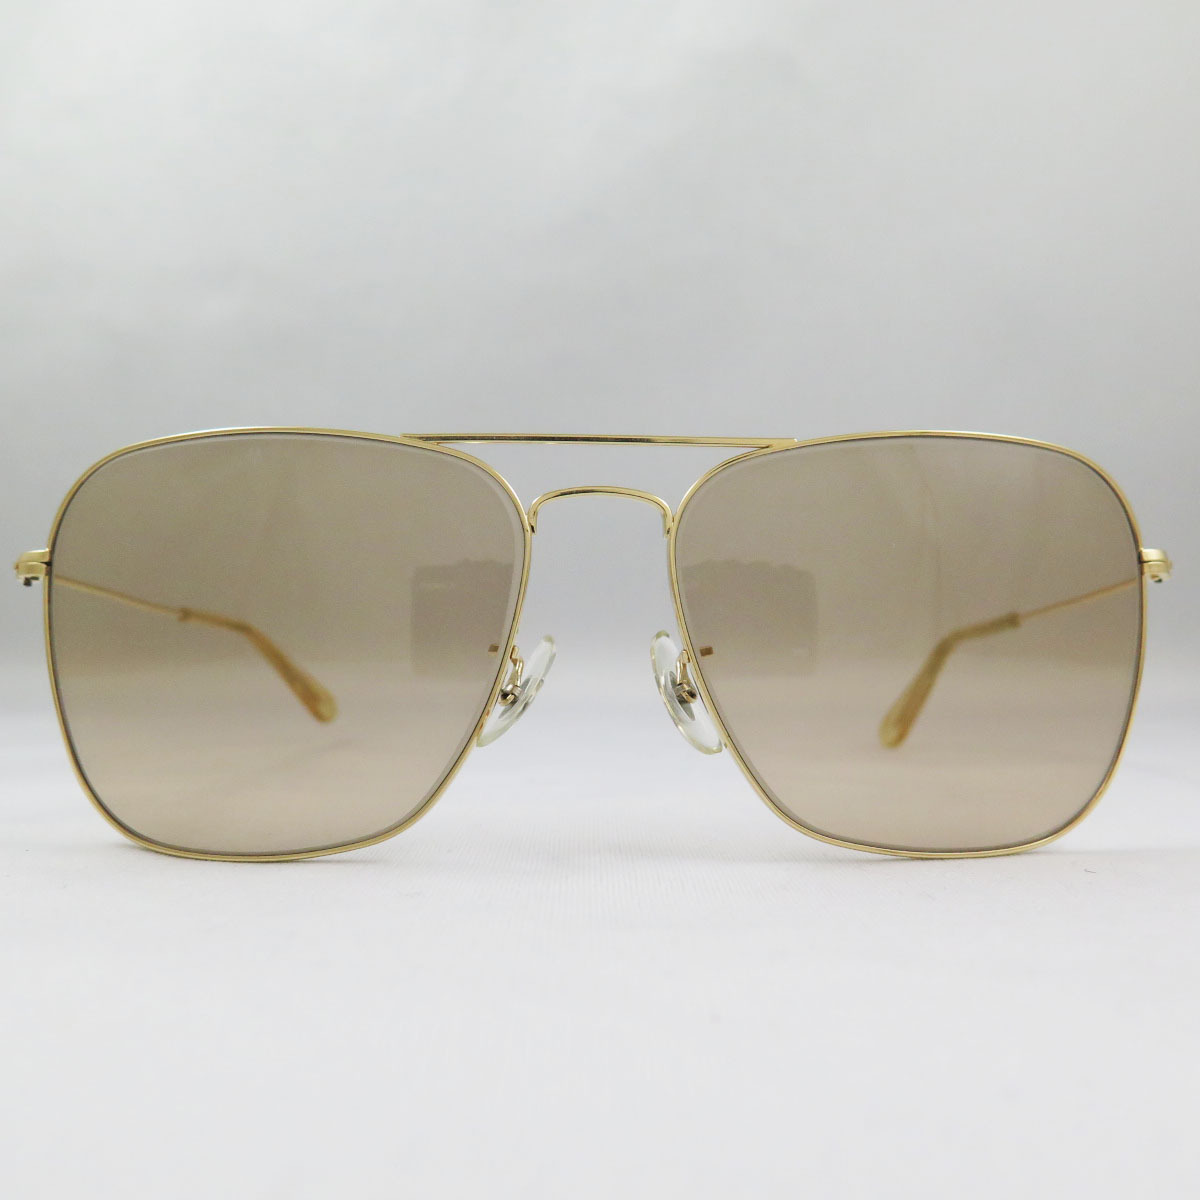 70s B&L Ray Ban CARABAN VINTAGE SUNGLASSES 58mm RayBan Caravan Vintage солнцезащитные очки бежевый style свет RAY-BAN USA